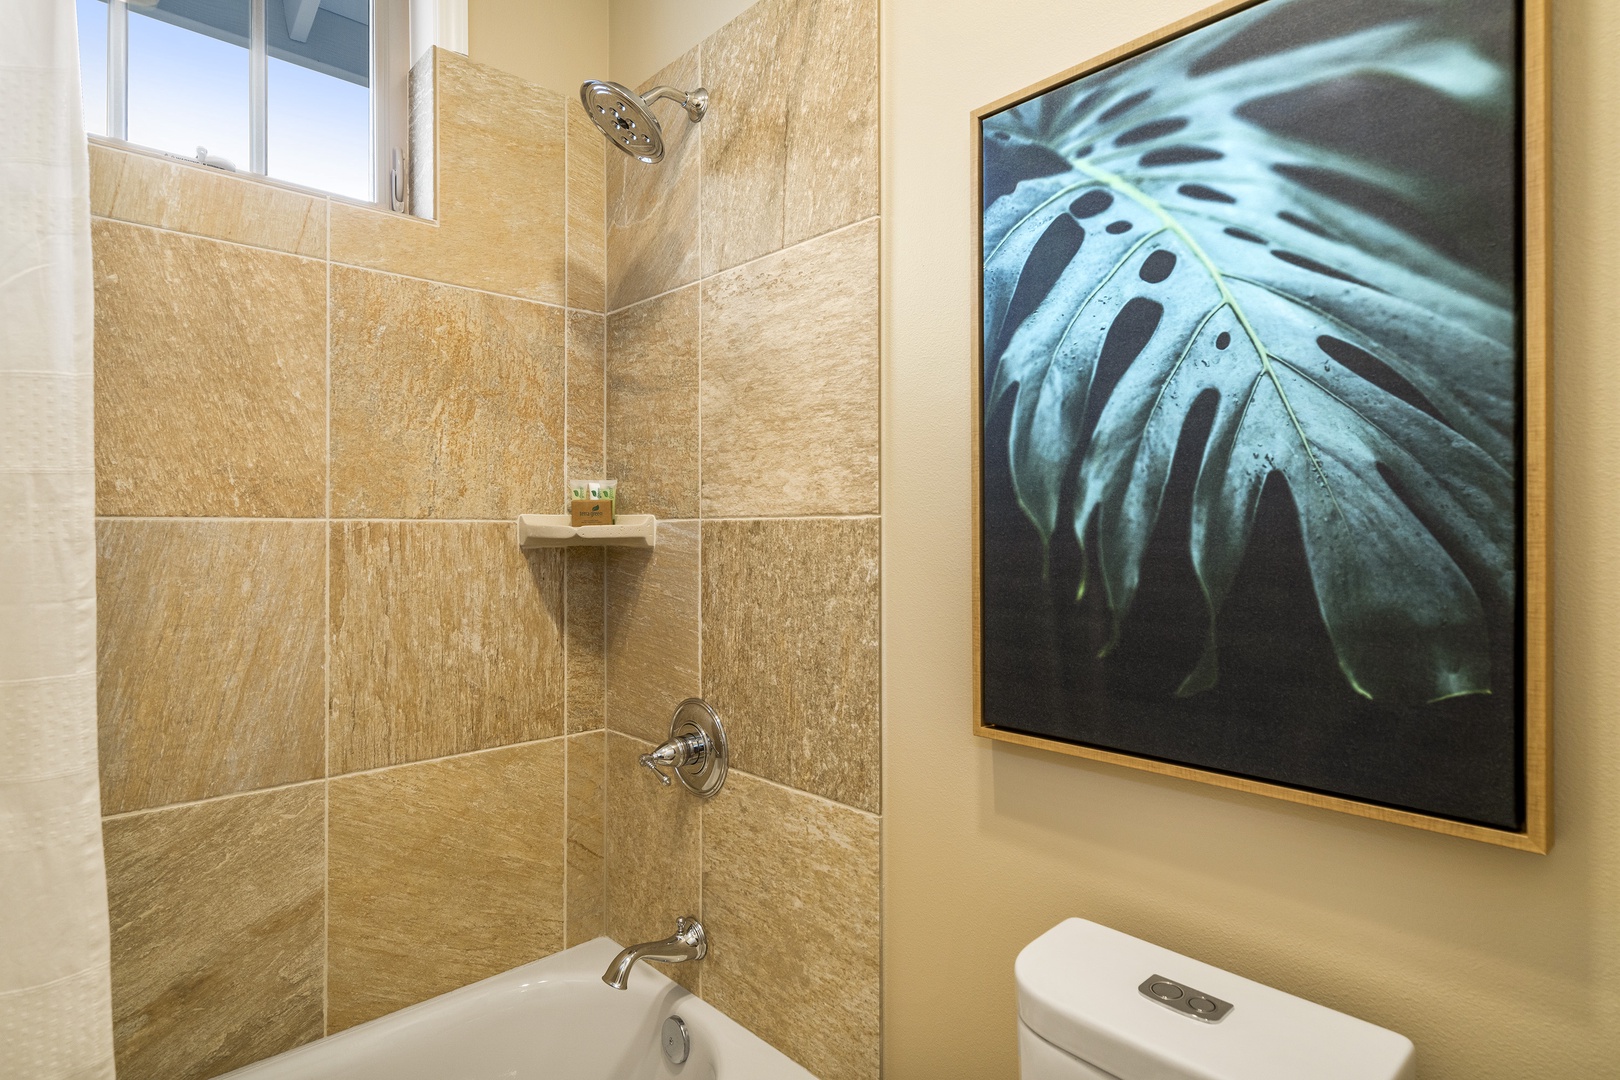 Kailua-Kona Vacation Rentals, Holua Kai #26 - Upstairs guest bathroom with tub/shower combo